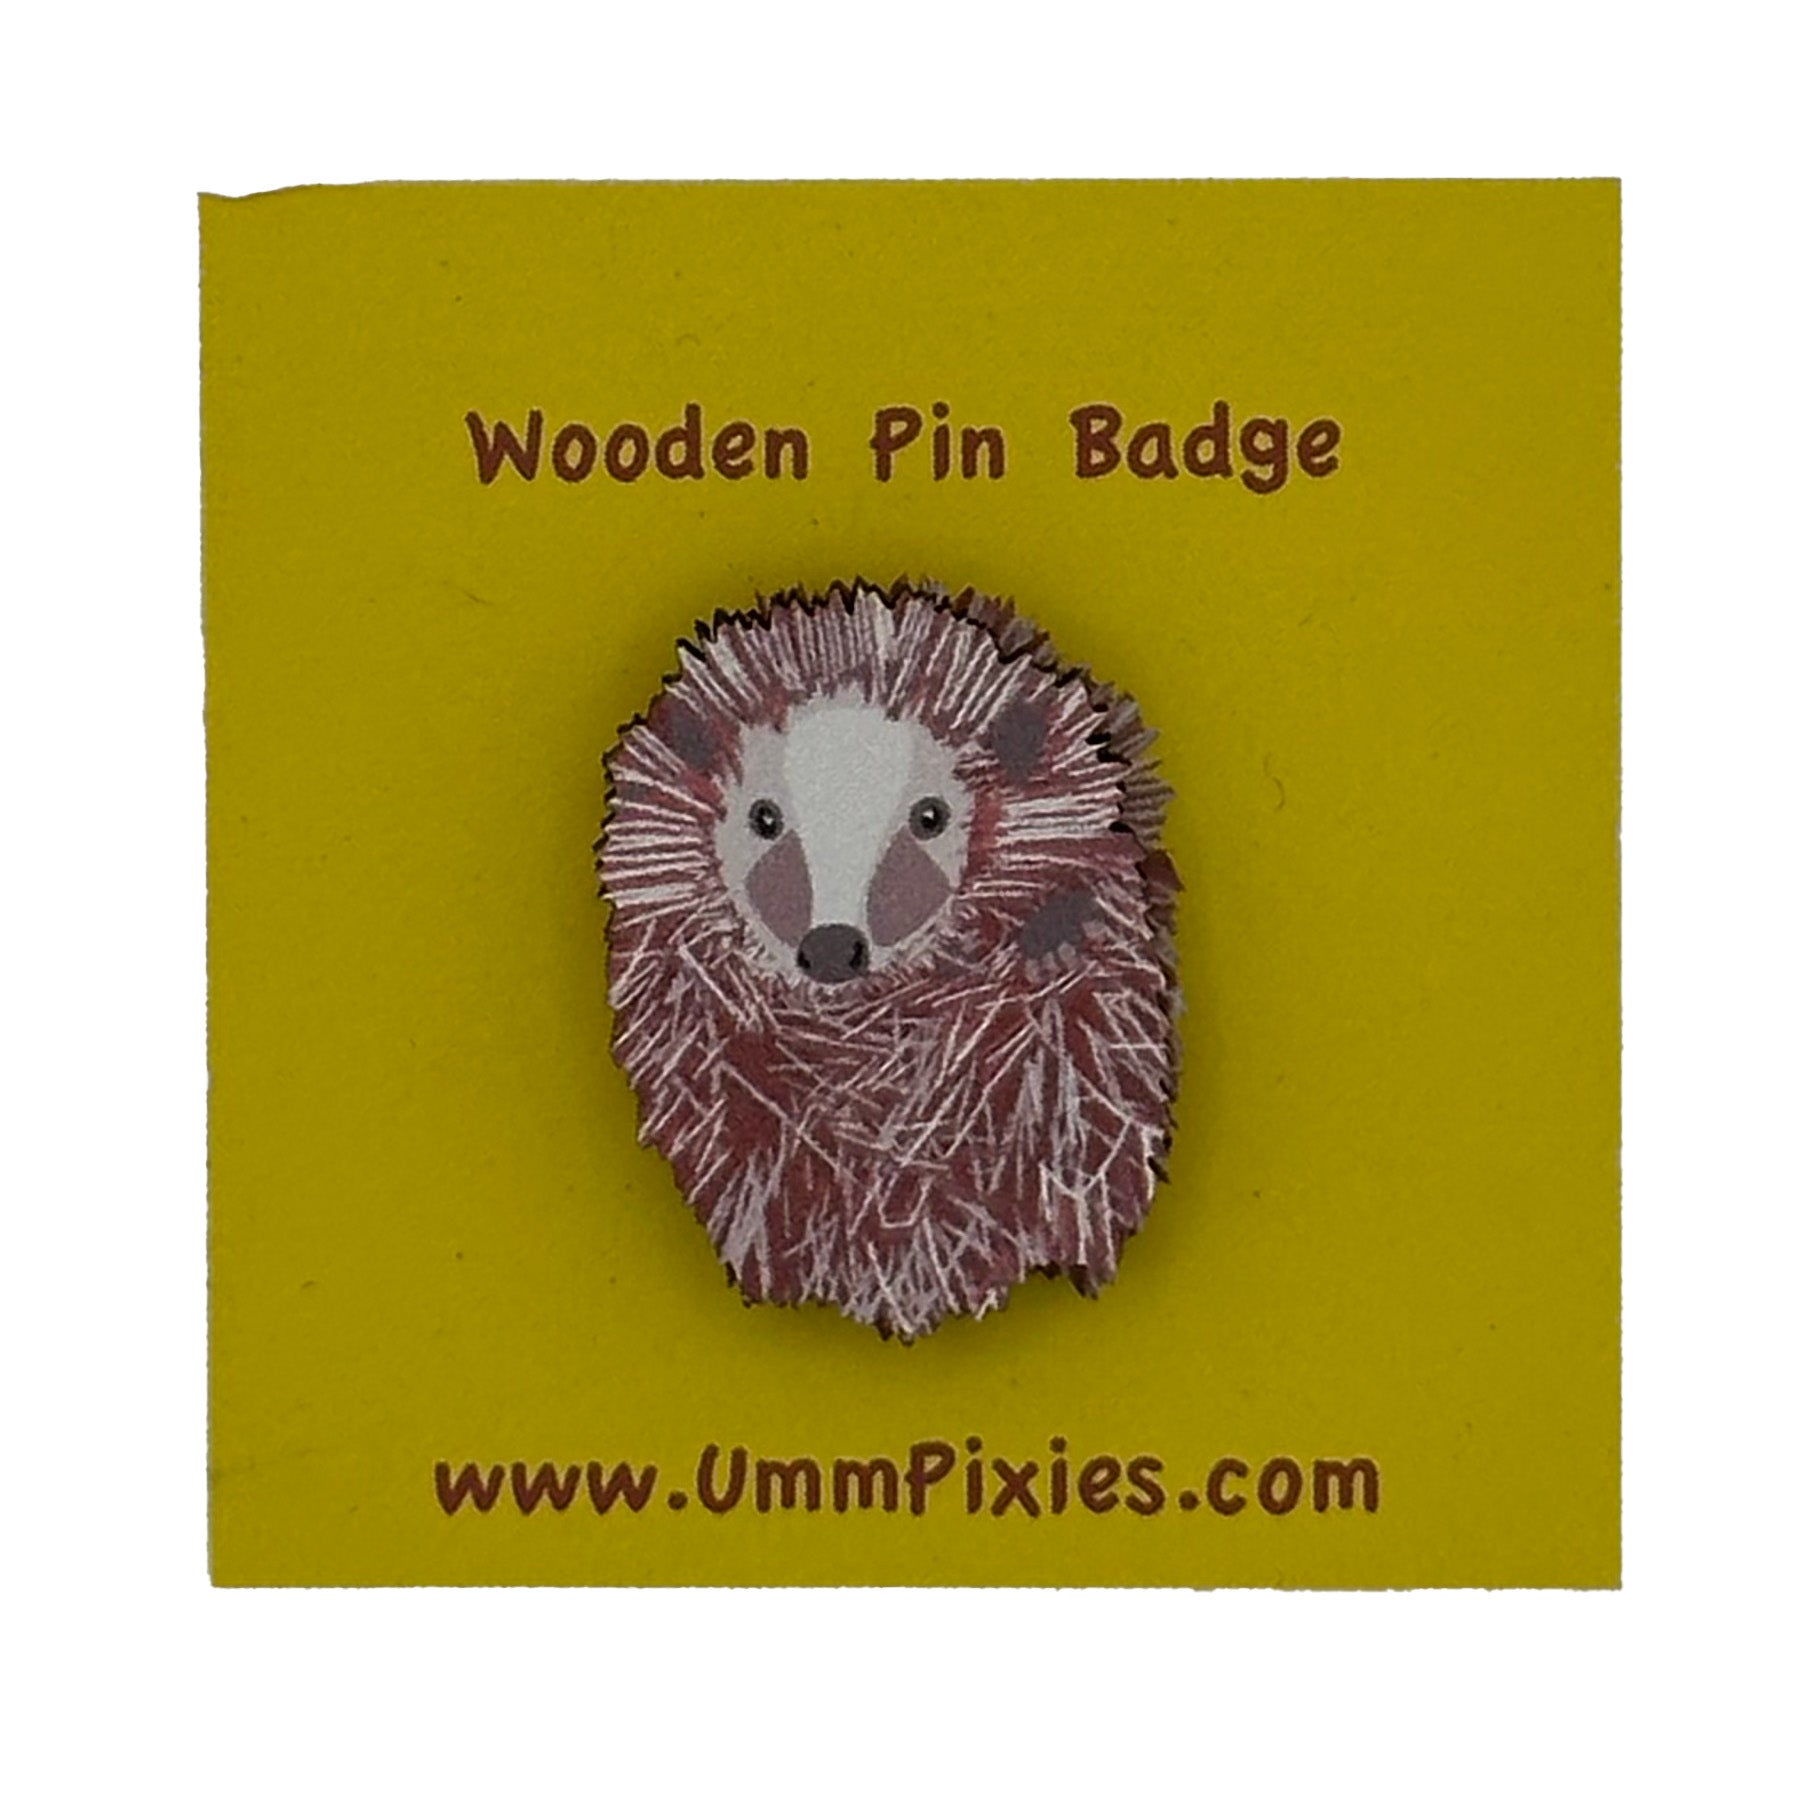 hedgehog wooden pin badge shown on display card